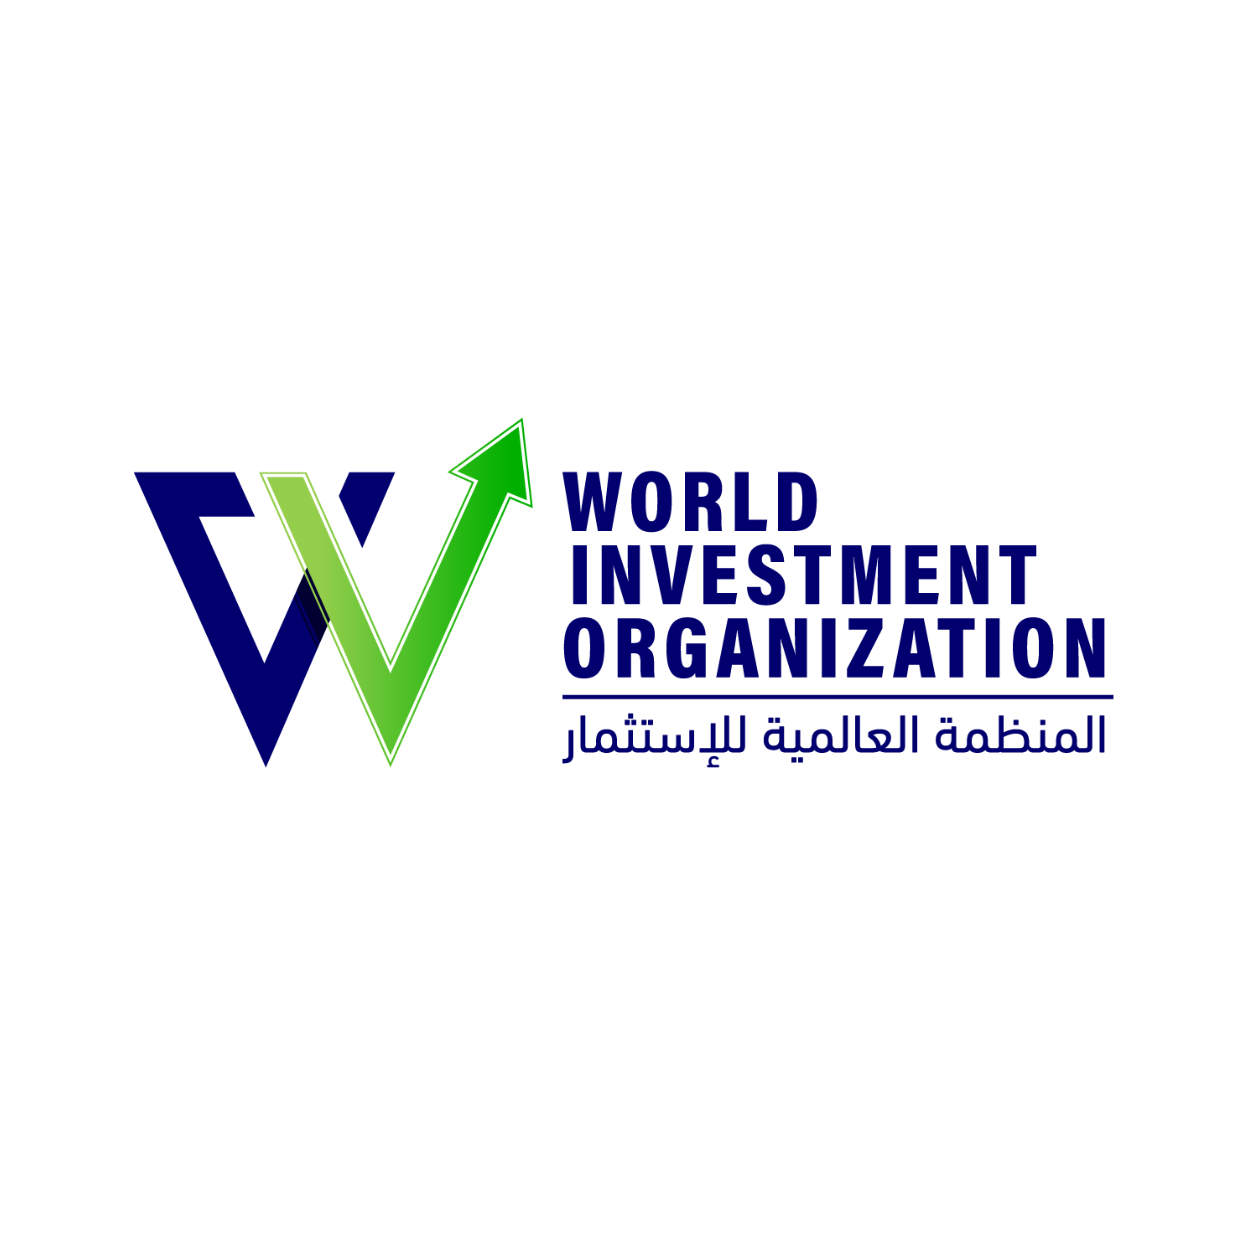 WORLD INVESTMENT ORGANIZATION